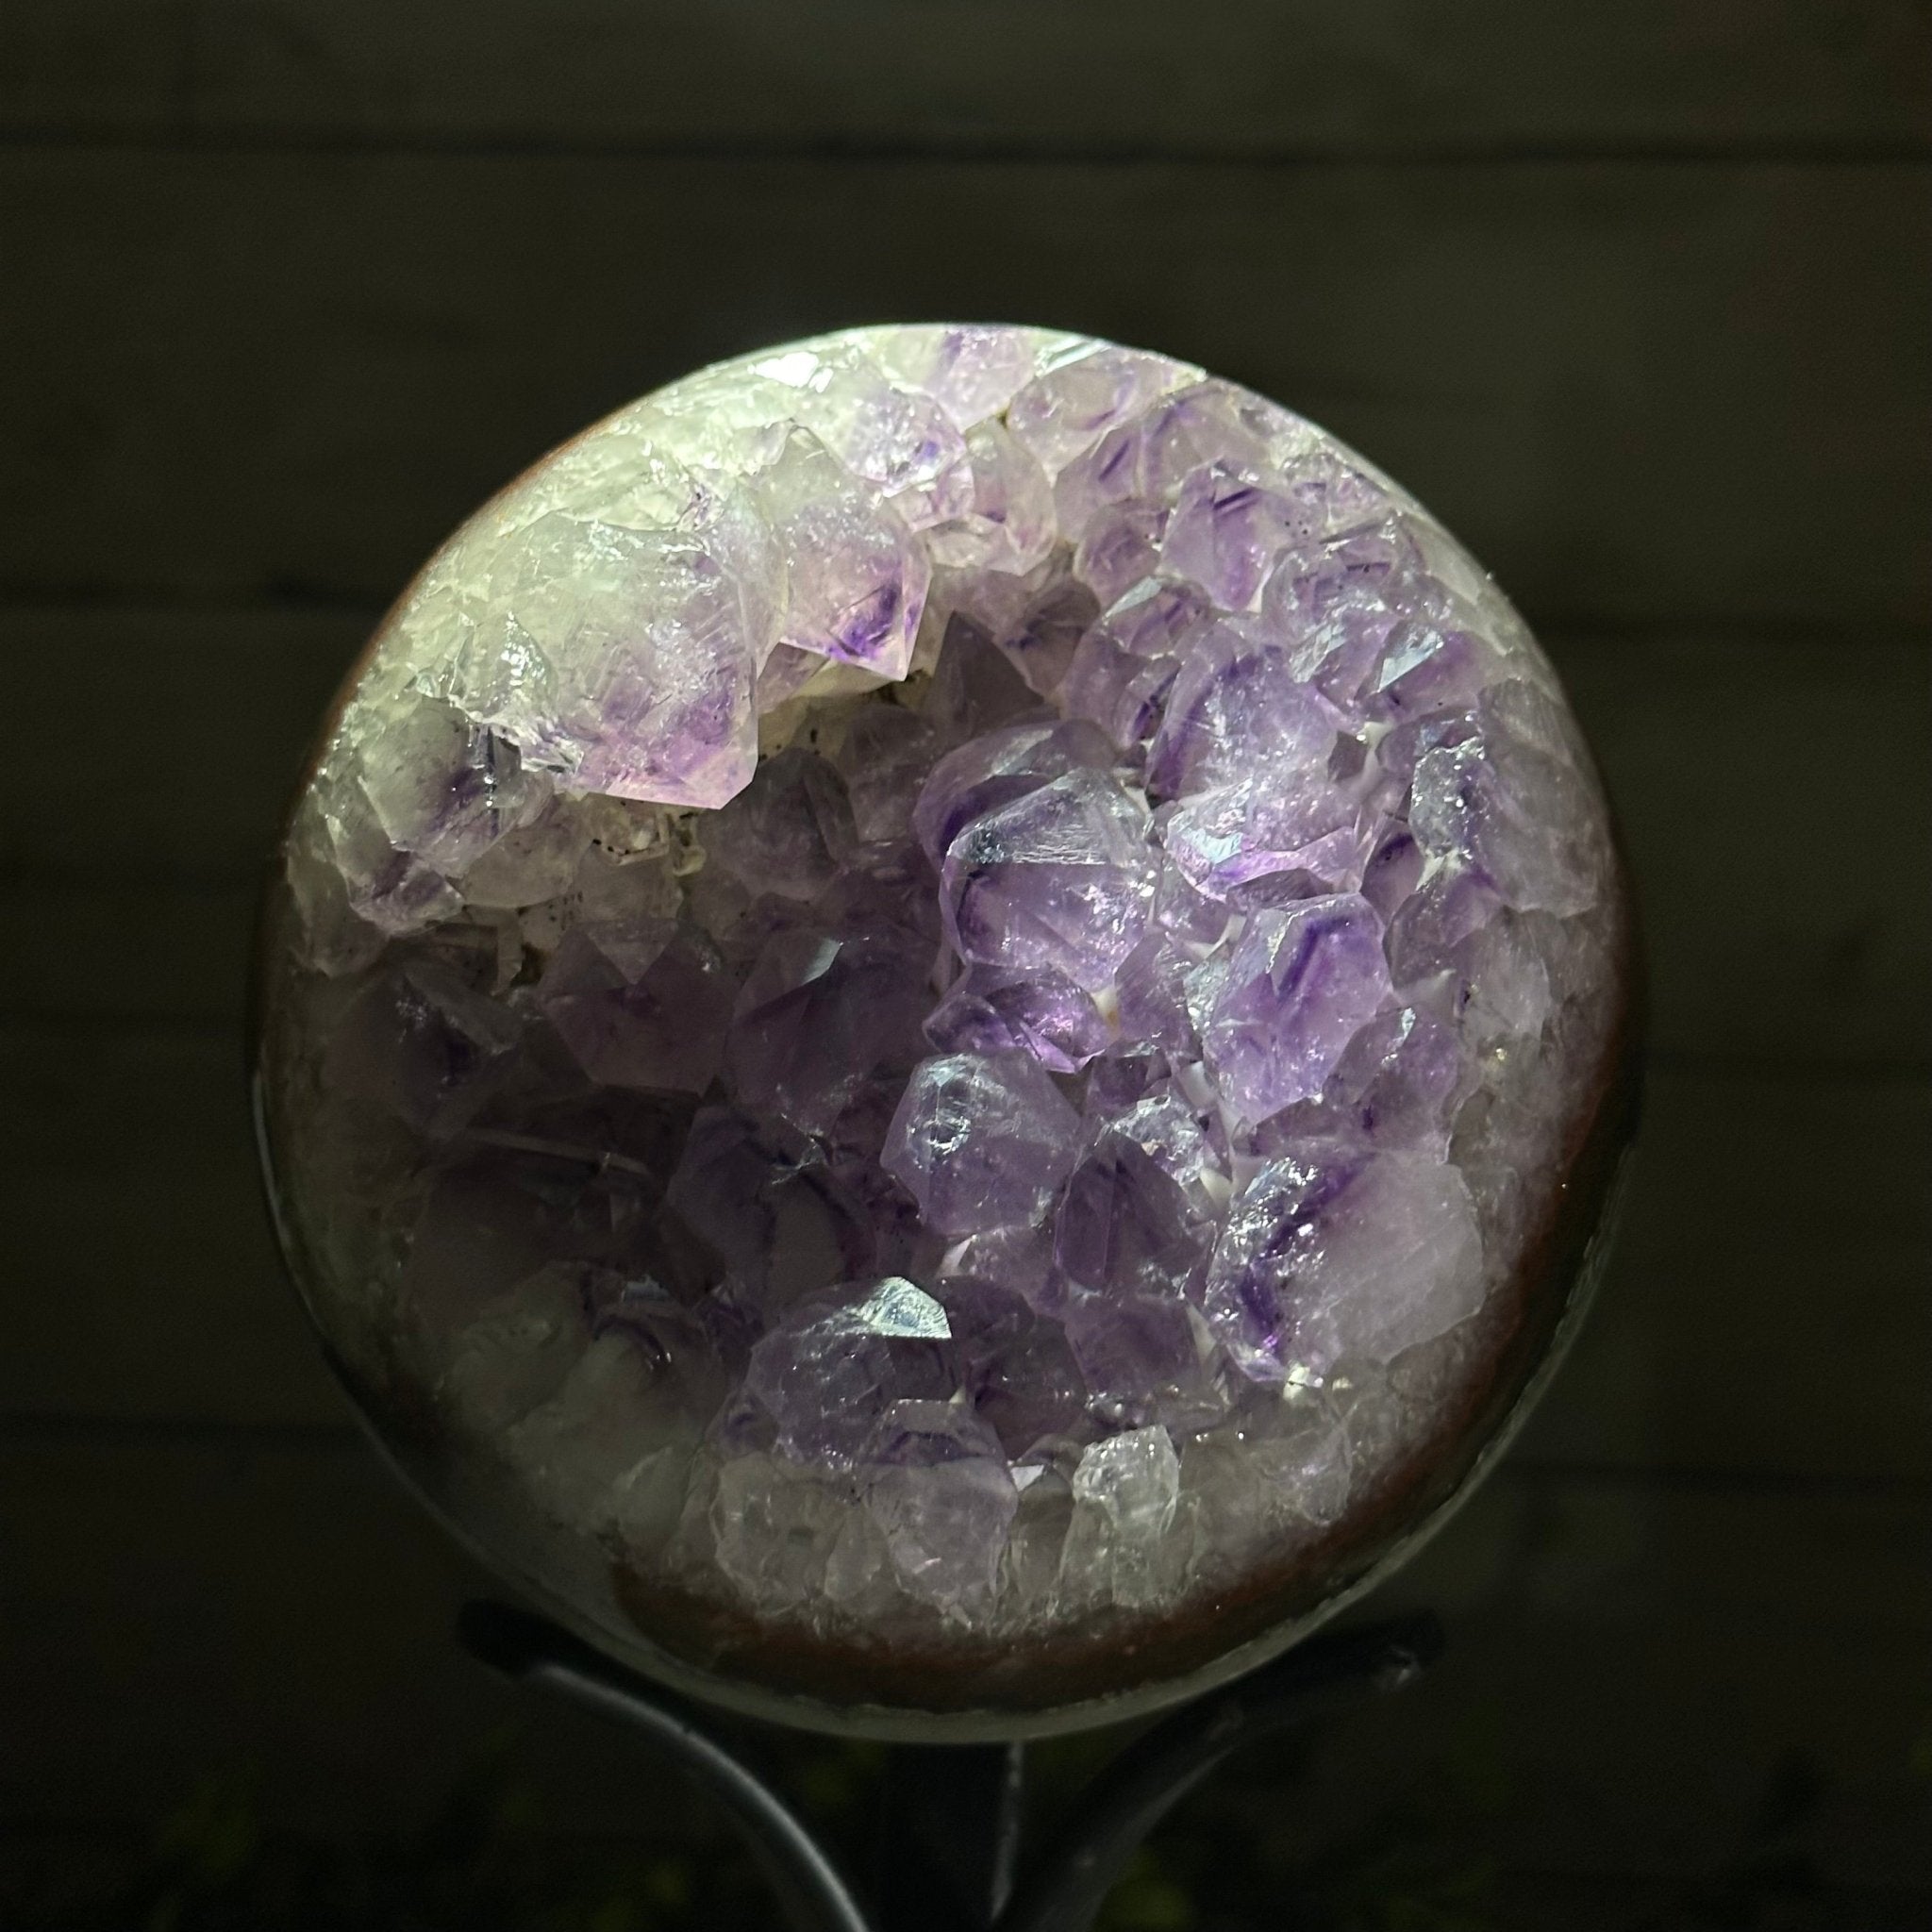 Druzy Amethyst Sphere on a Metal Stand, 4.3 lbs & 9.1" Tall #5630-0063 - Brazil GemsBrazil GemsDruzy Amethyst Sphere on a Metal Stand, 4.3 lbs & 9.1" Tall #5630-0063Spheres5630-0063